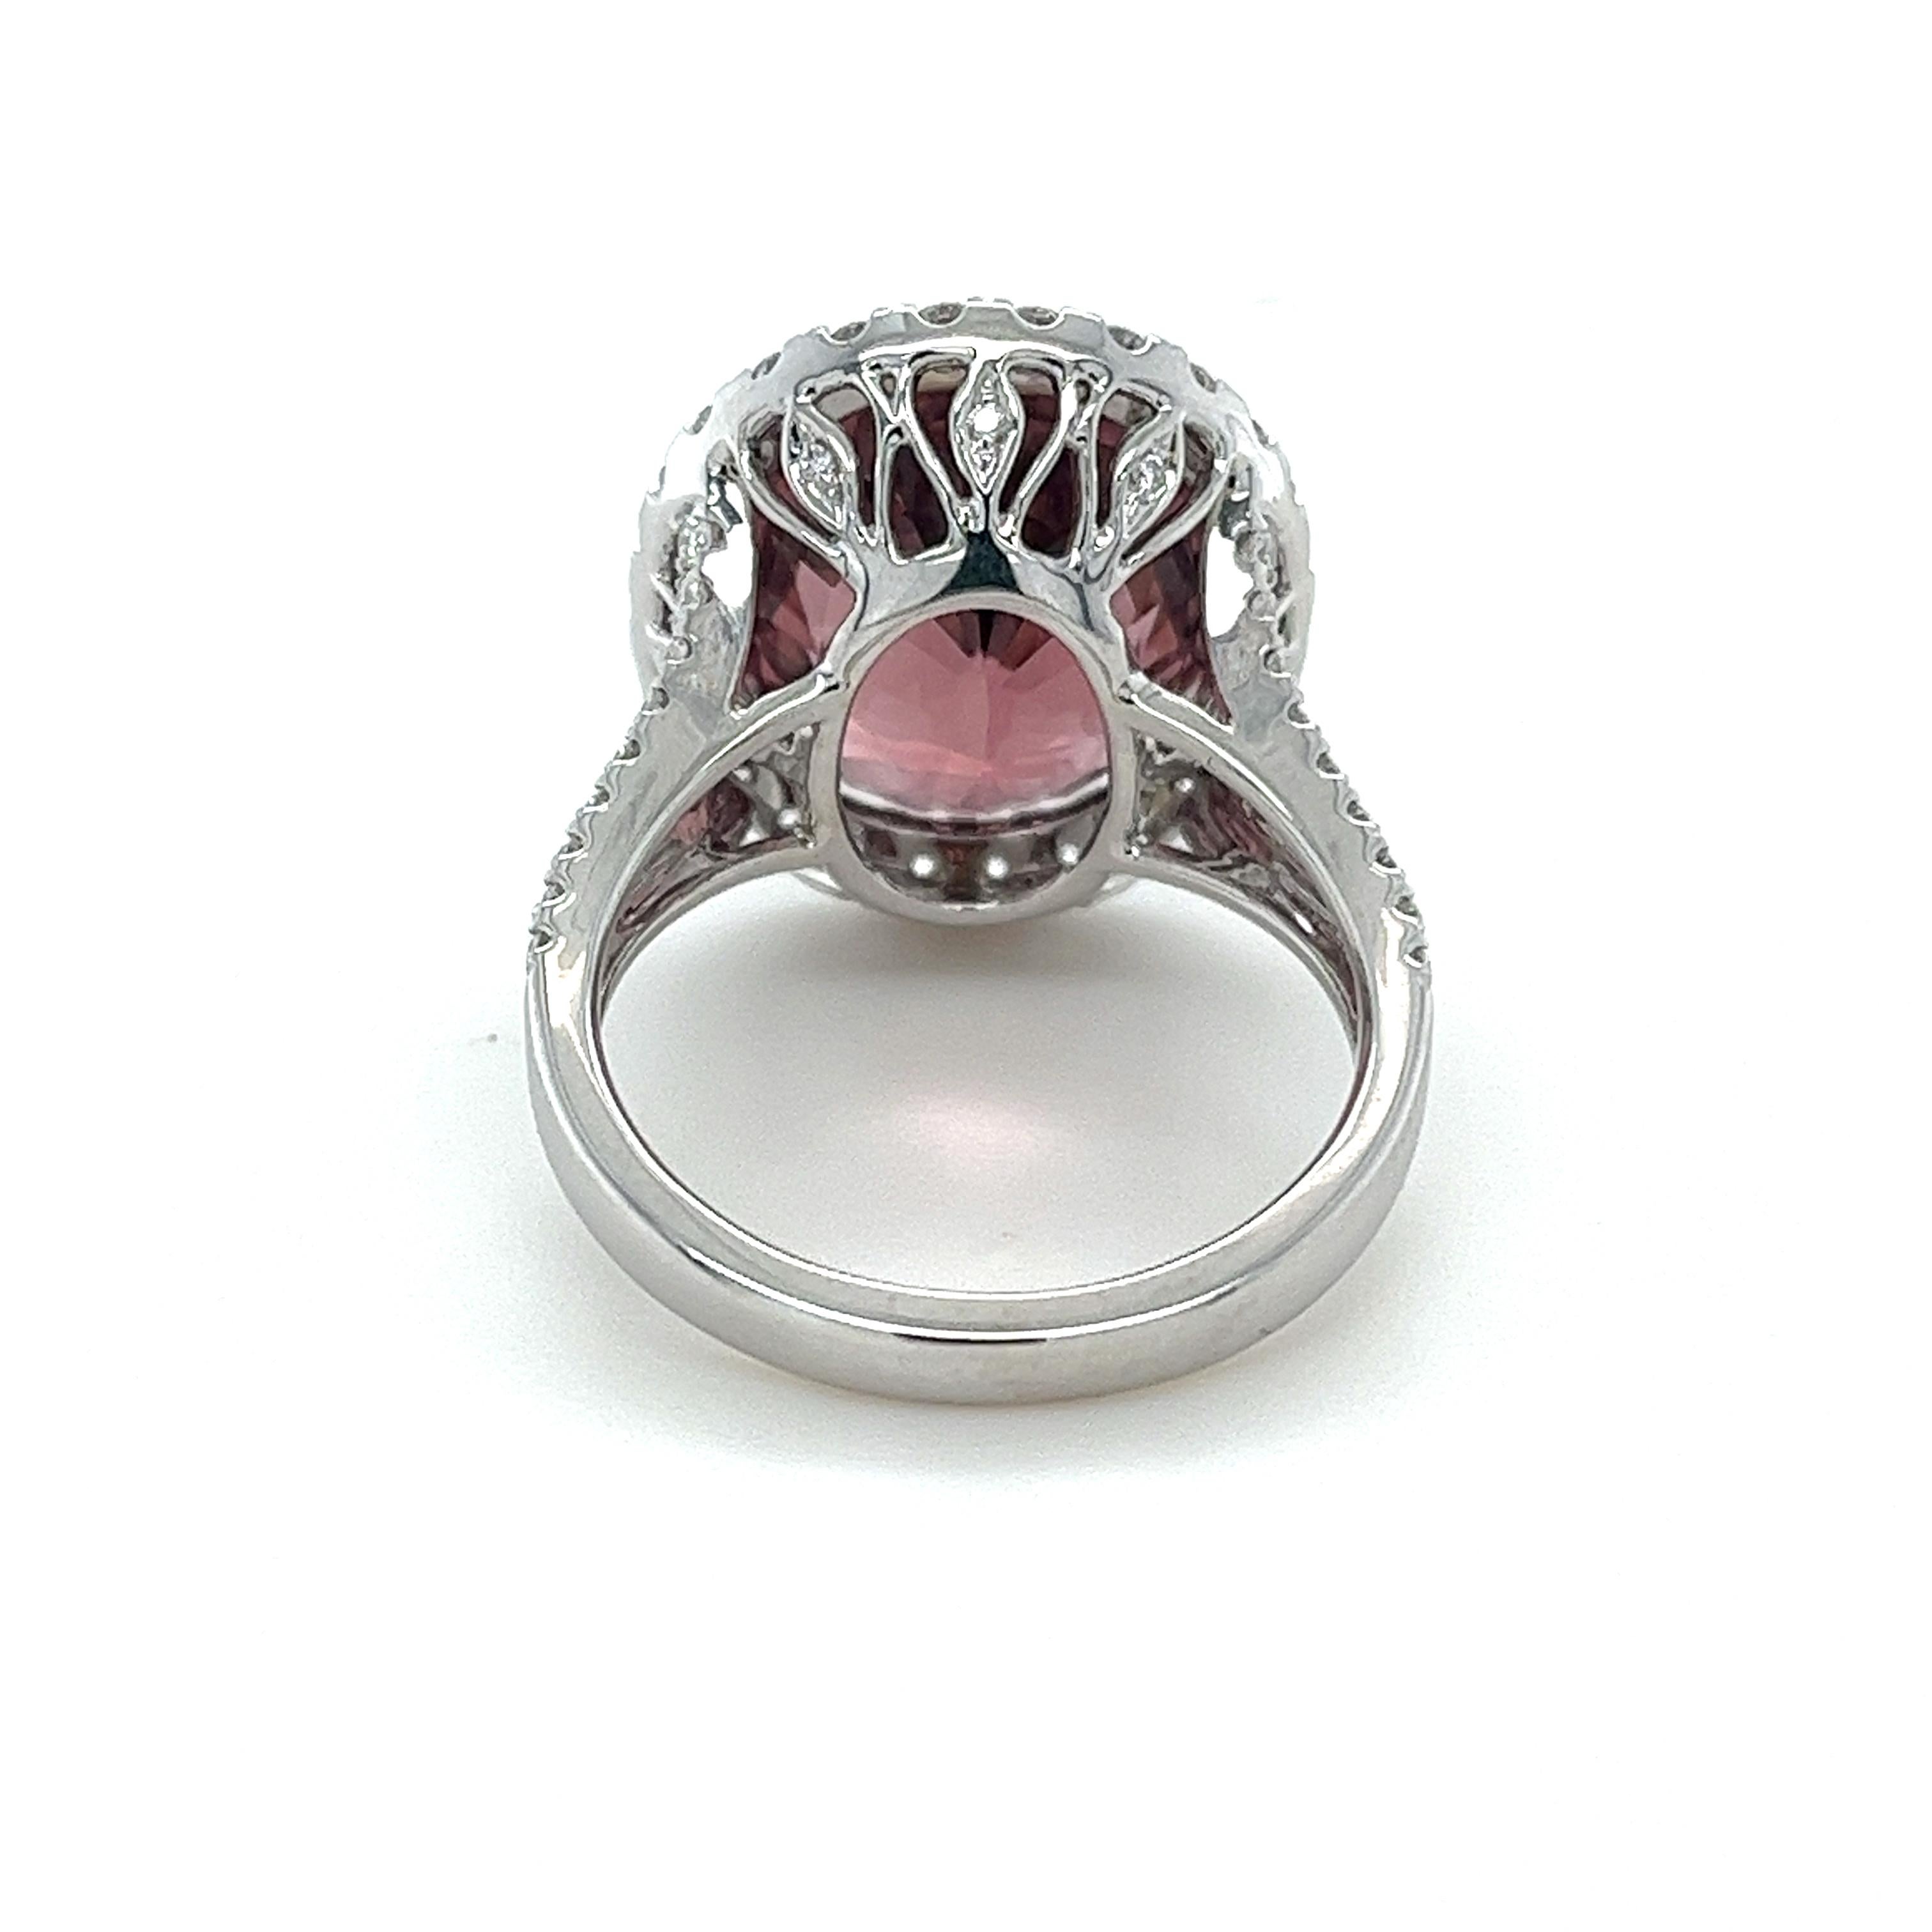 Oval Cut 9.89 Carat GIA Certified Pink Tourmaline & Diamond Ring in 18 Karat White Gold For Sale